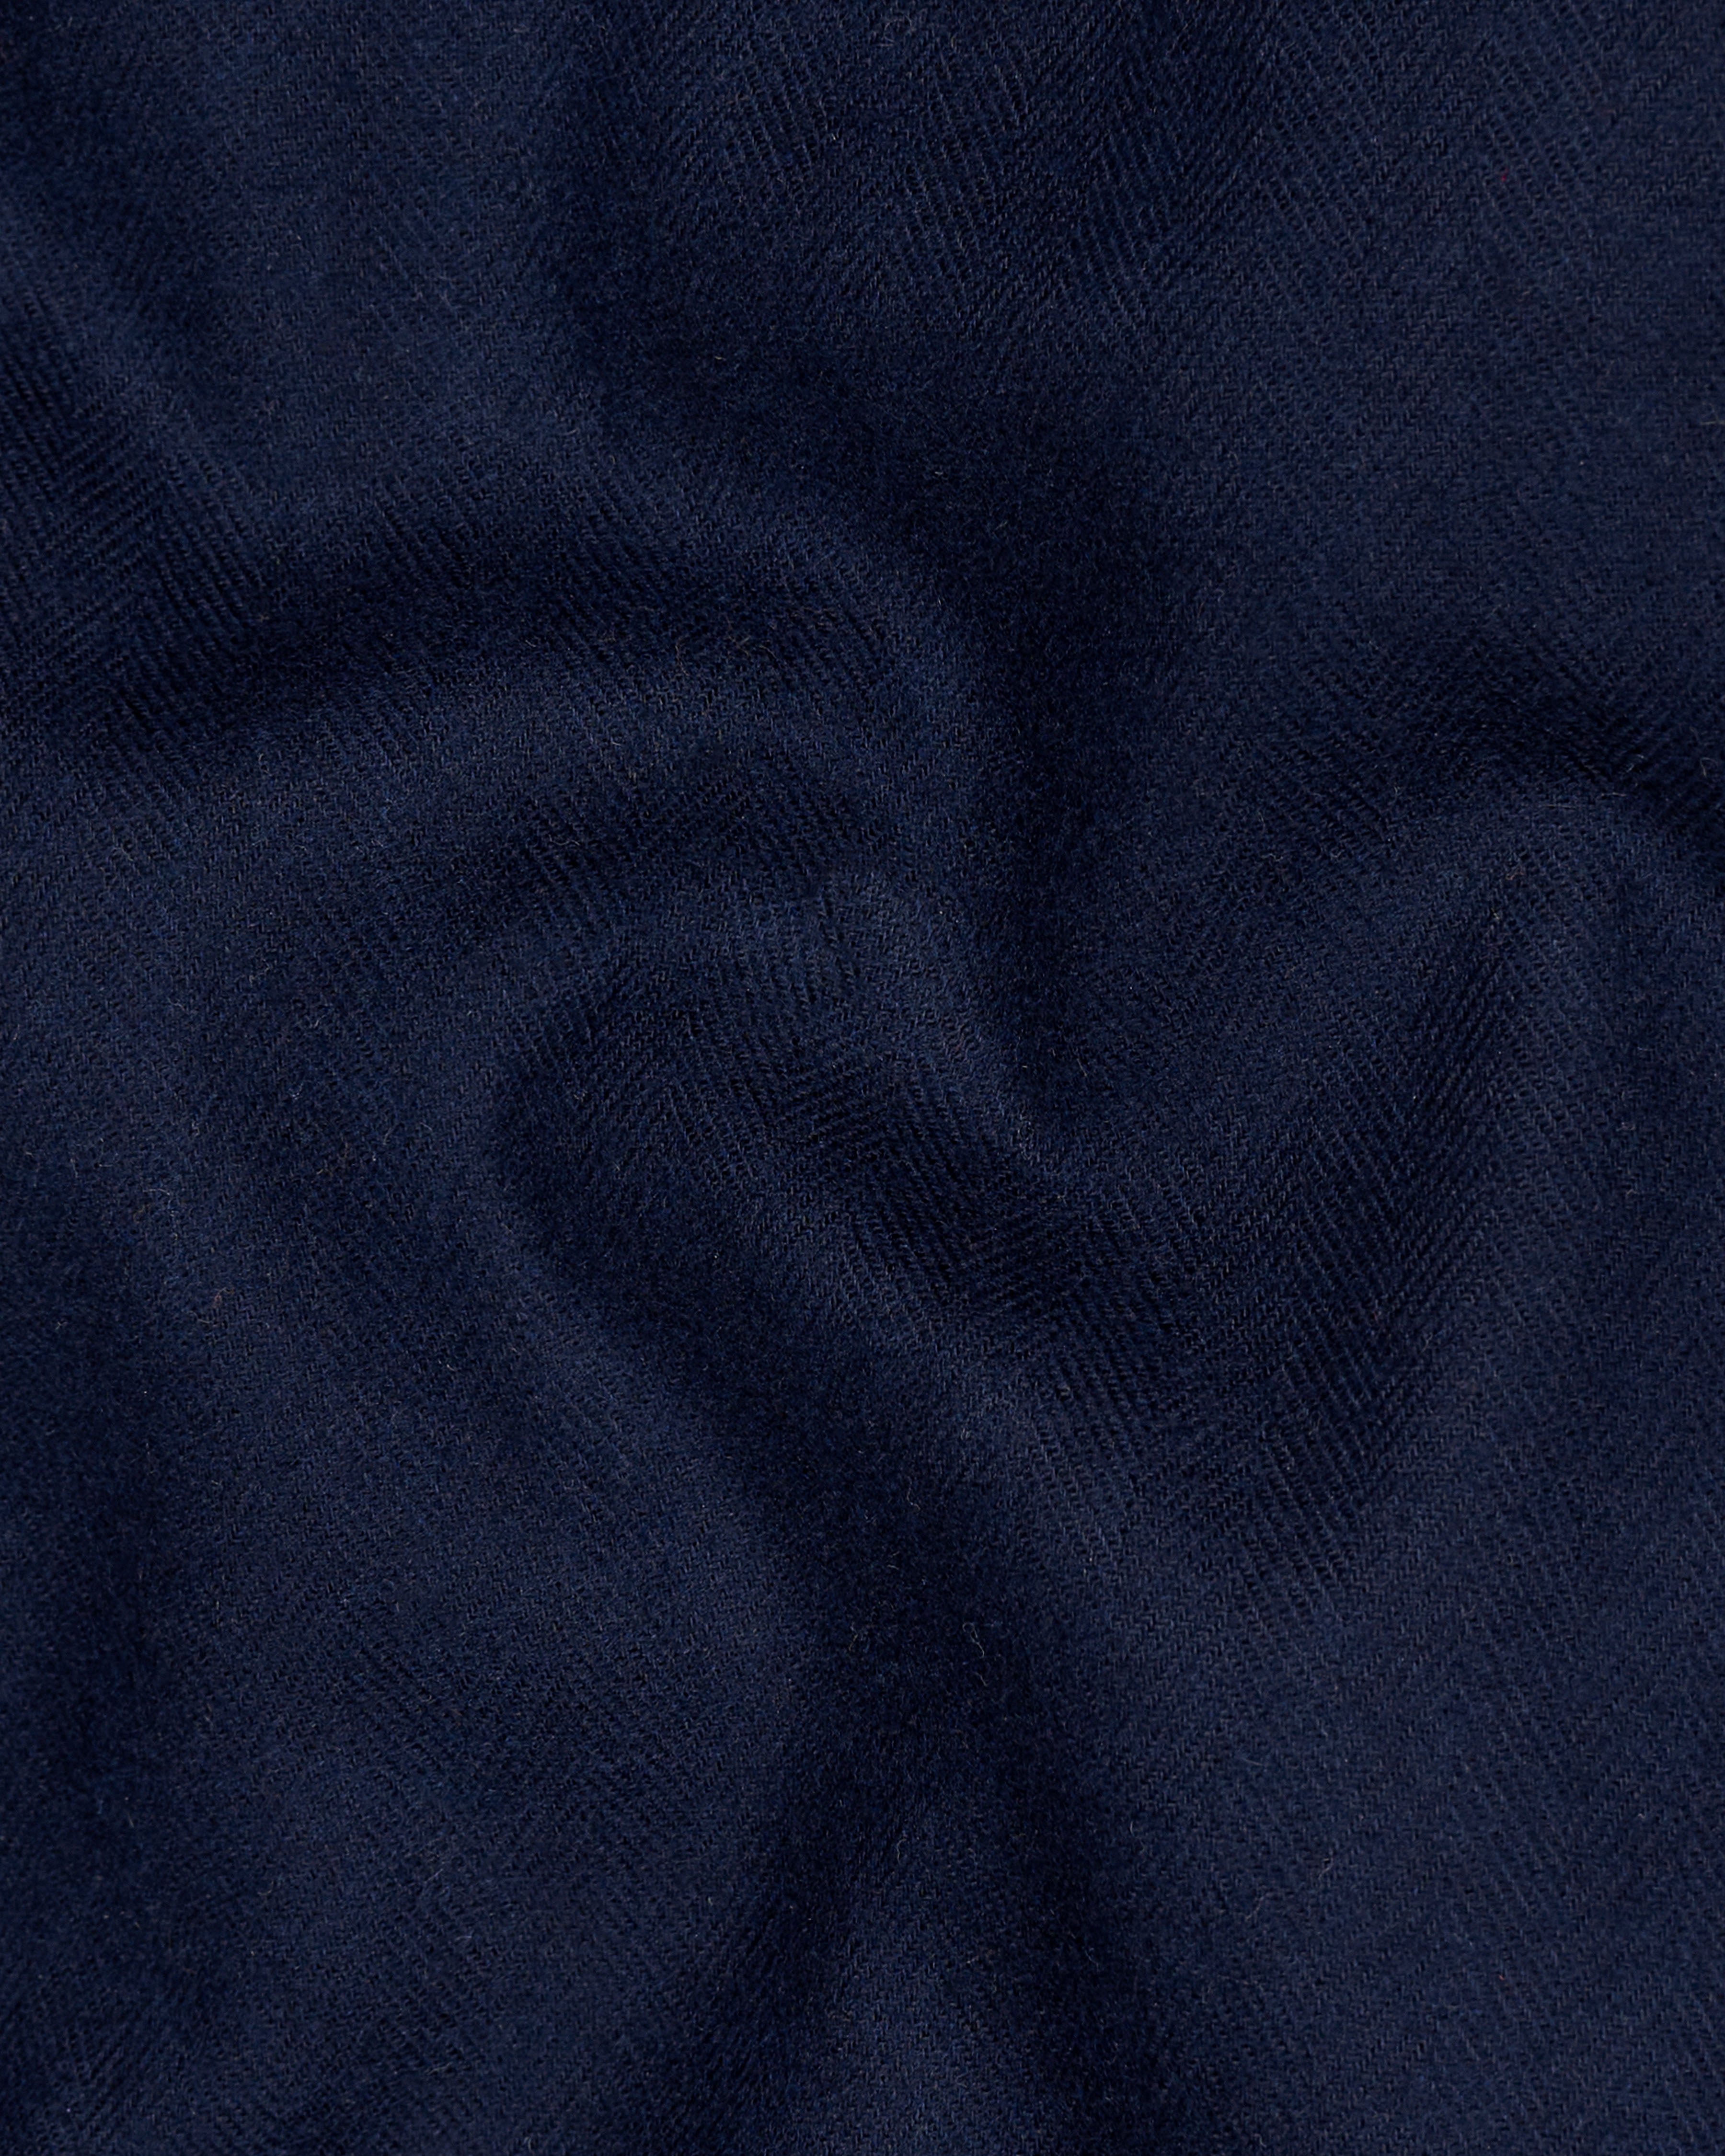 Mirage Navy Blue Flannel Hoodie Shirt with Zipper Closure